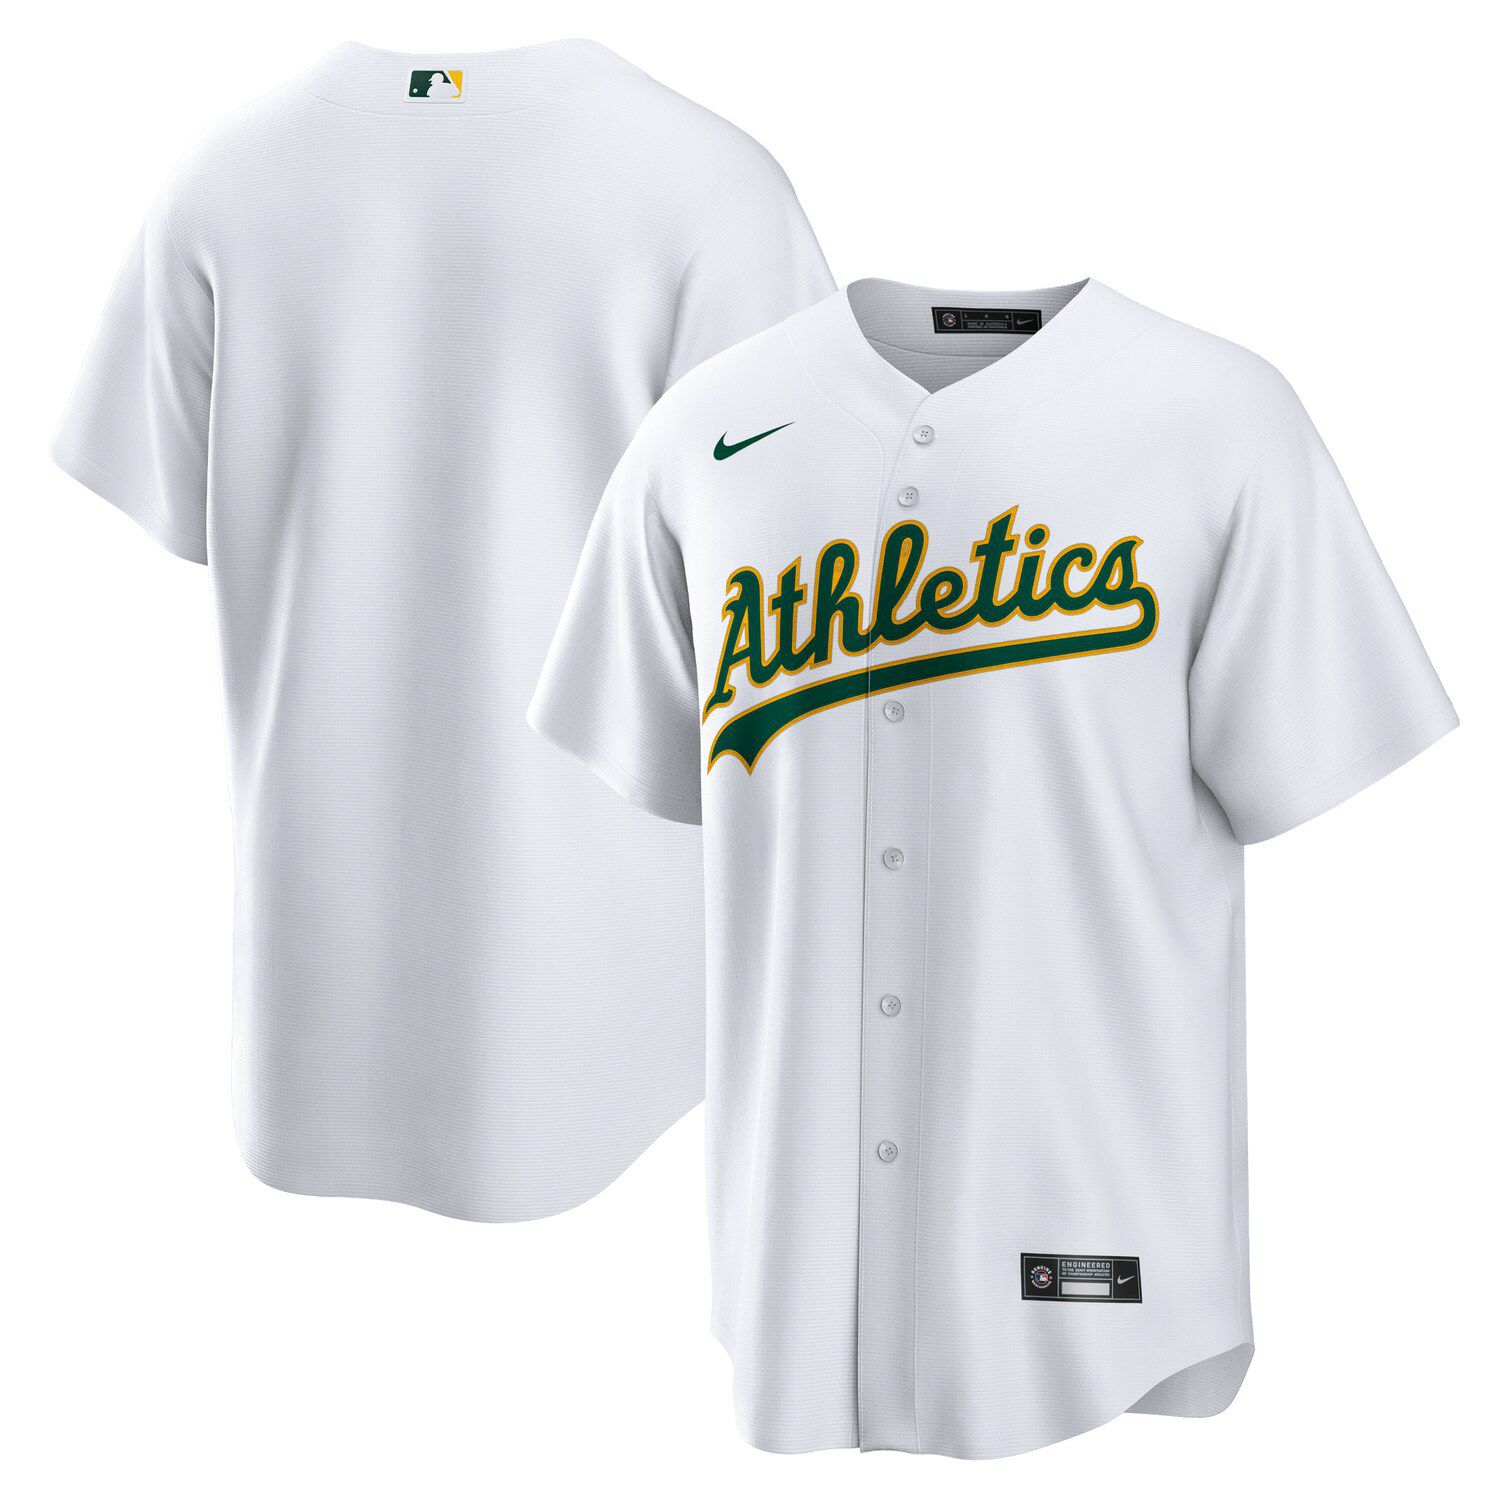 Men's Nike White/Navy Arizona Wildcats Pinstripe Replica Full-Button Baseball Jersey Size: 3XL